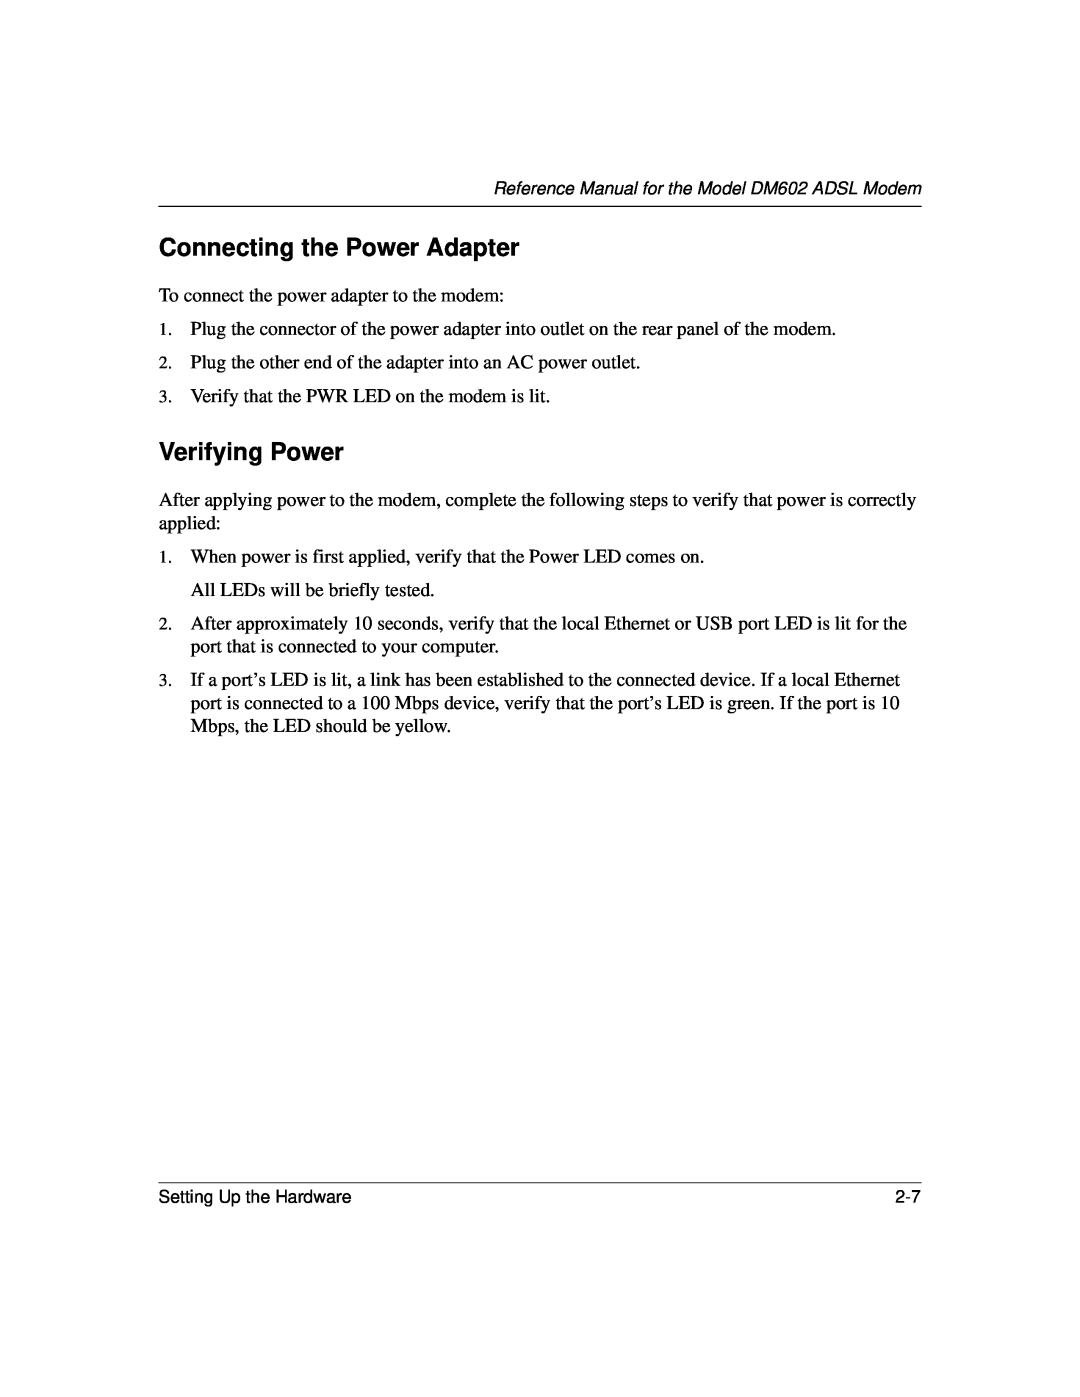 NETGEAR DM602 manual Connecting the Power Adapter, Verifying Power 